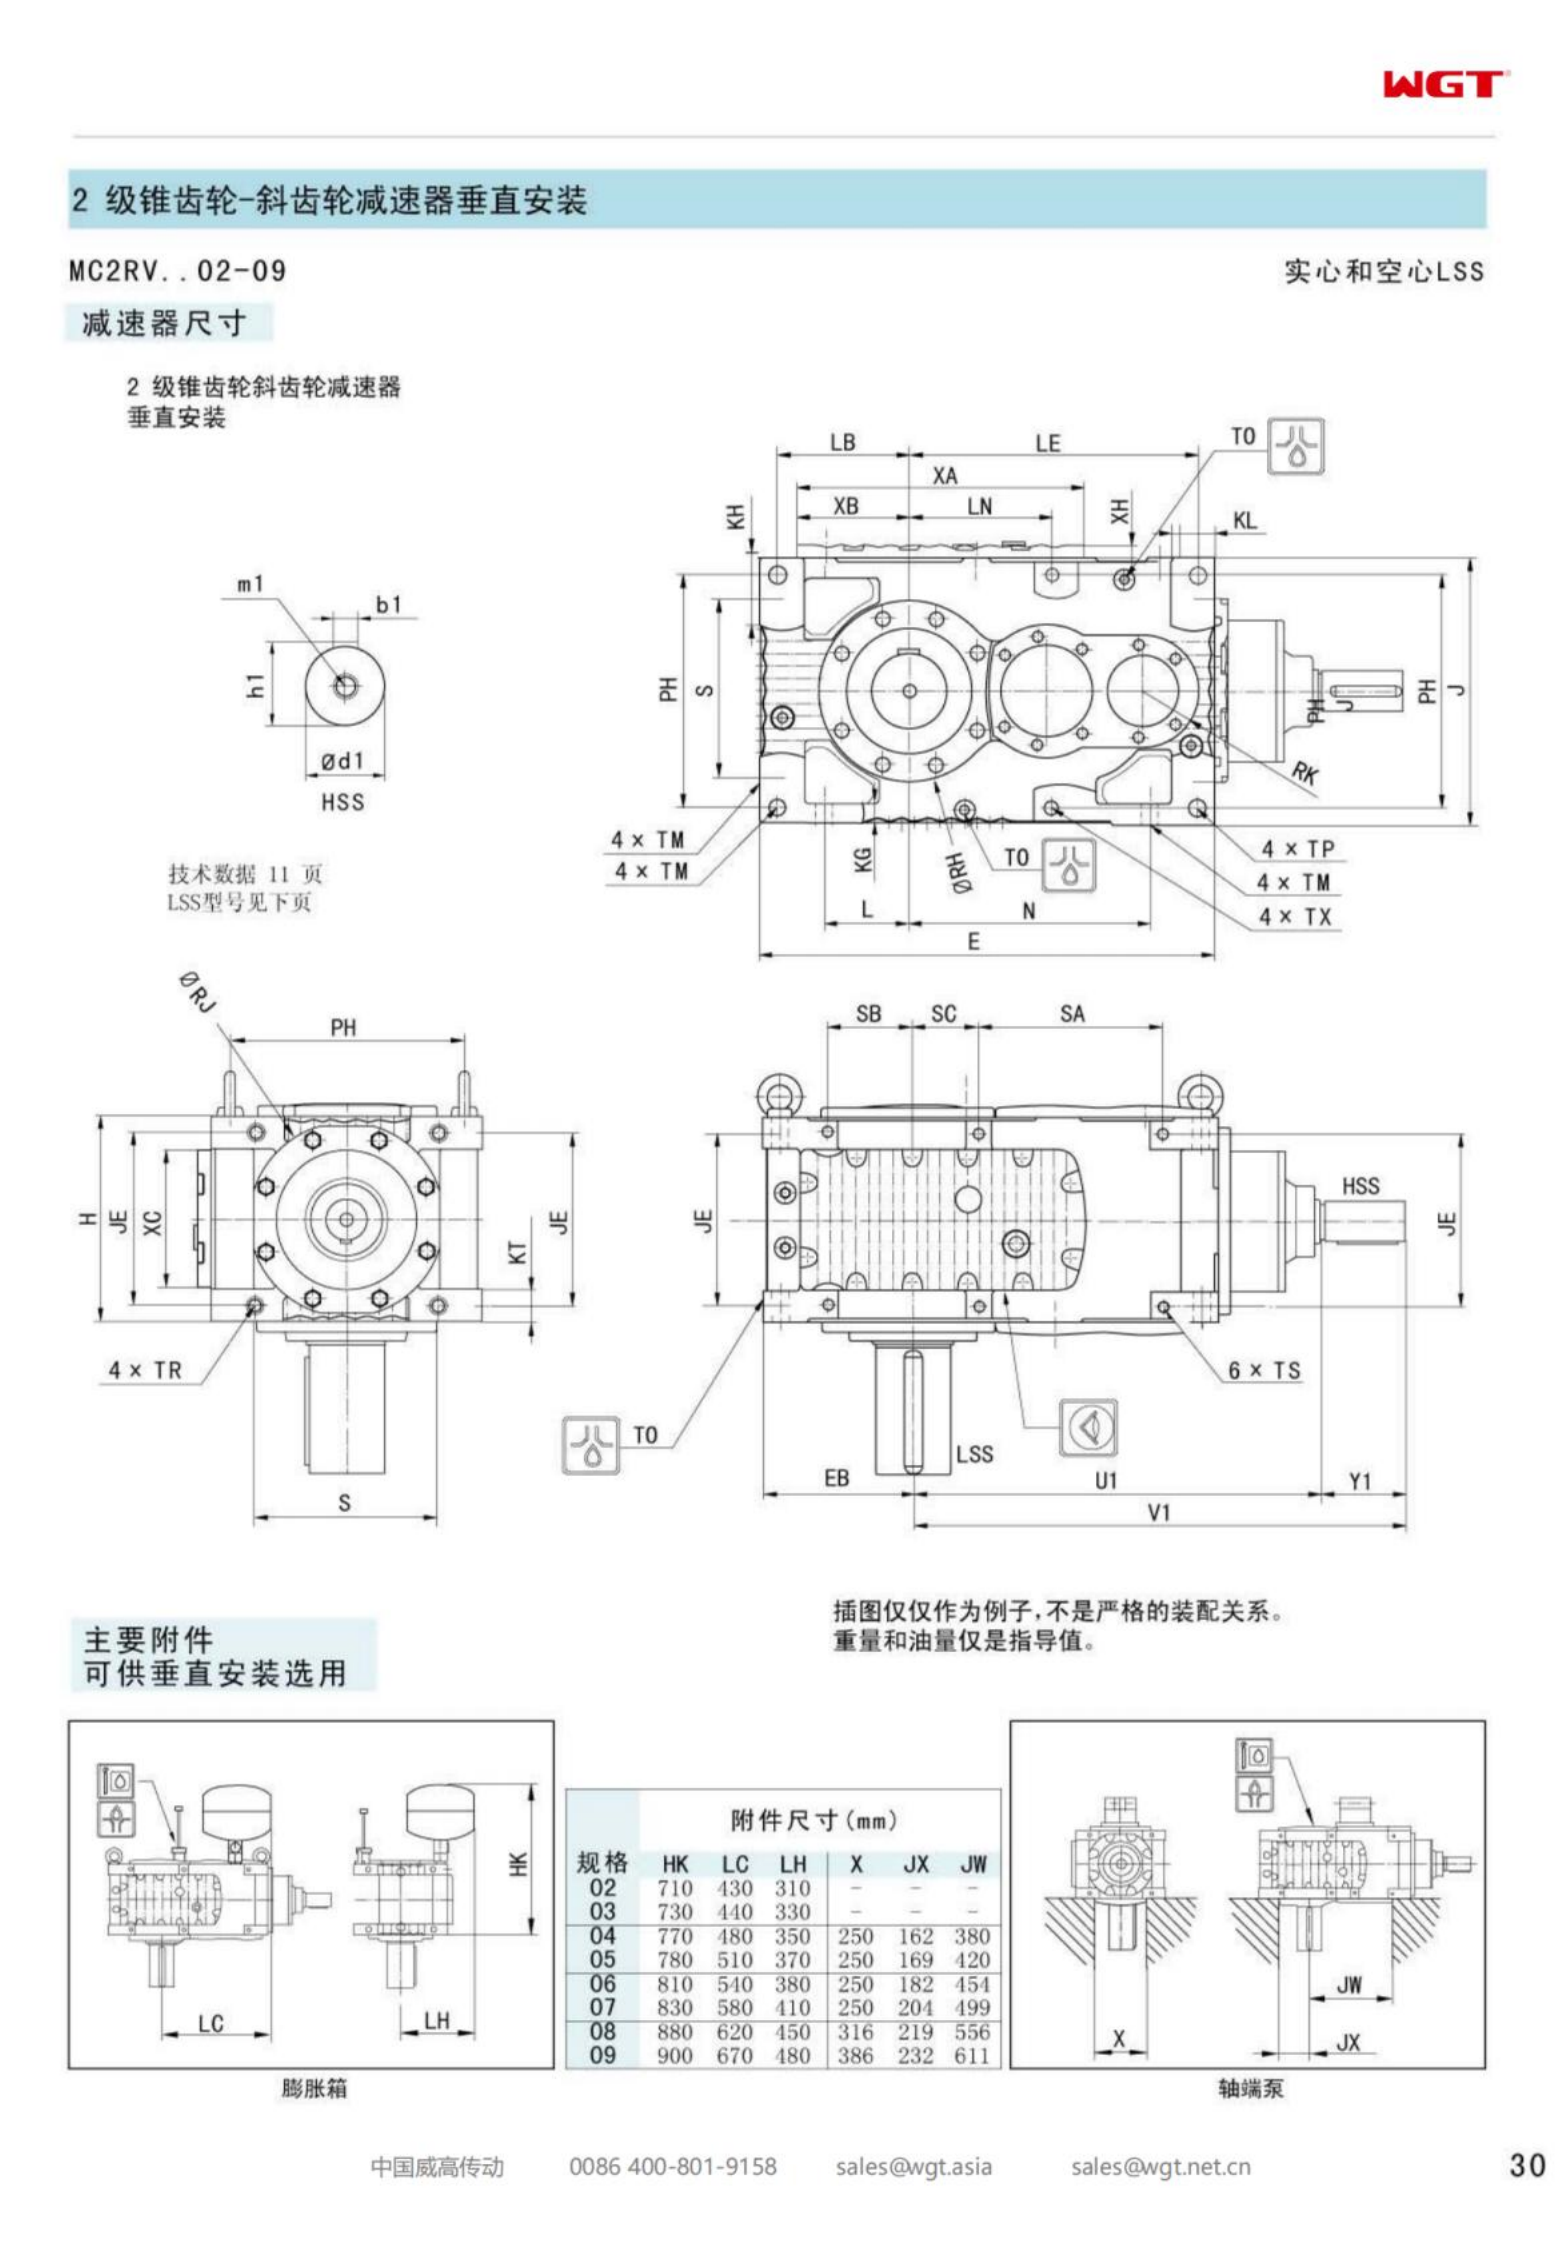 MC2RVHF05 replaces _SEW_MC_Series gearbox (patent)